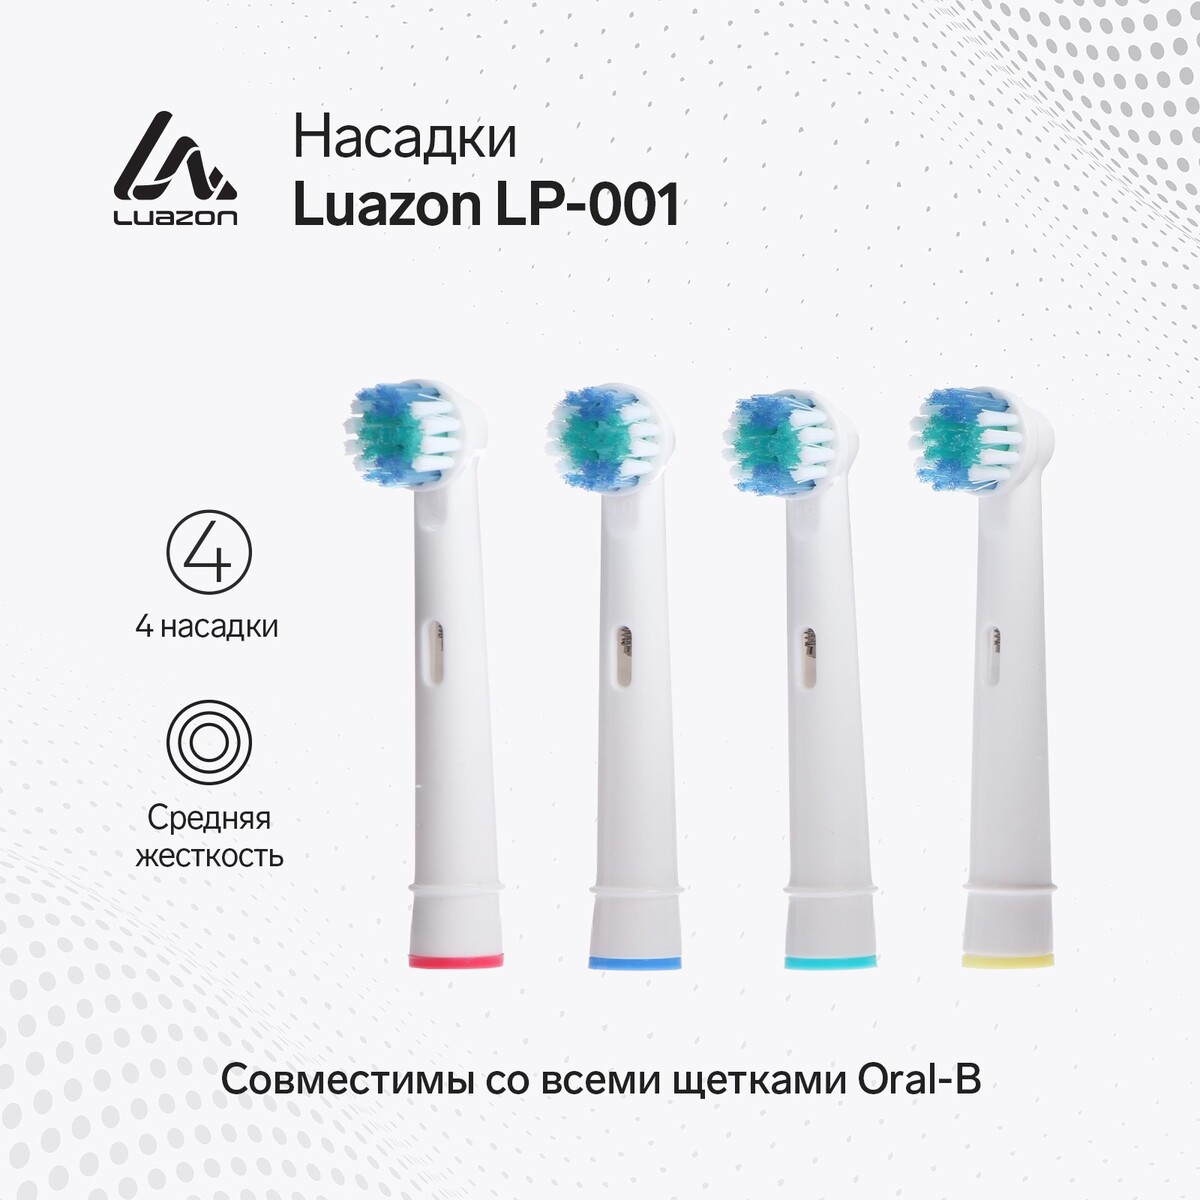  luazon lp-001,    oral b, 4   